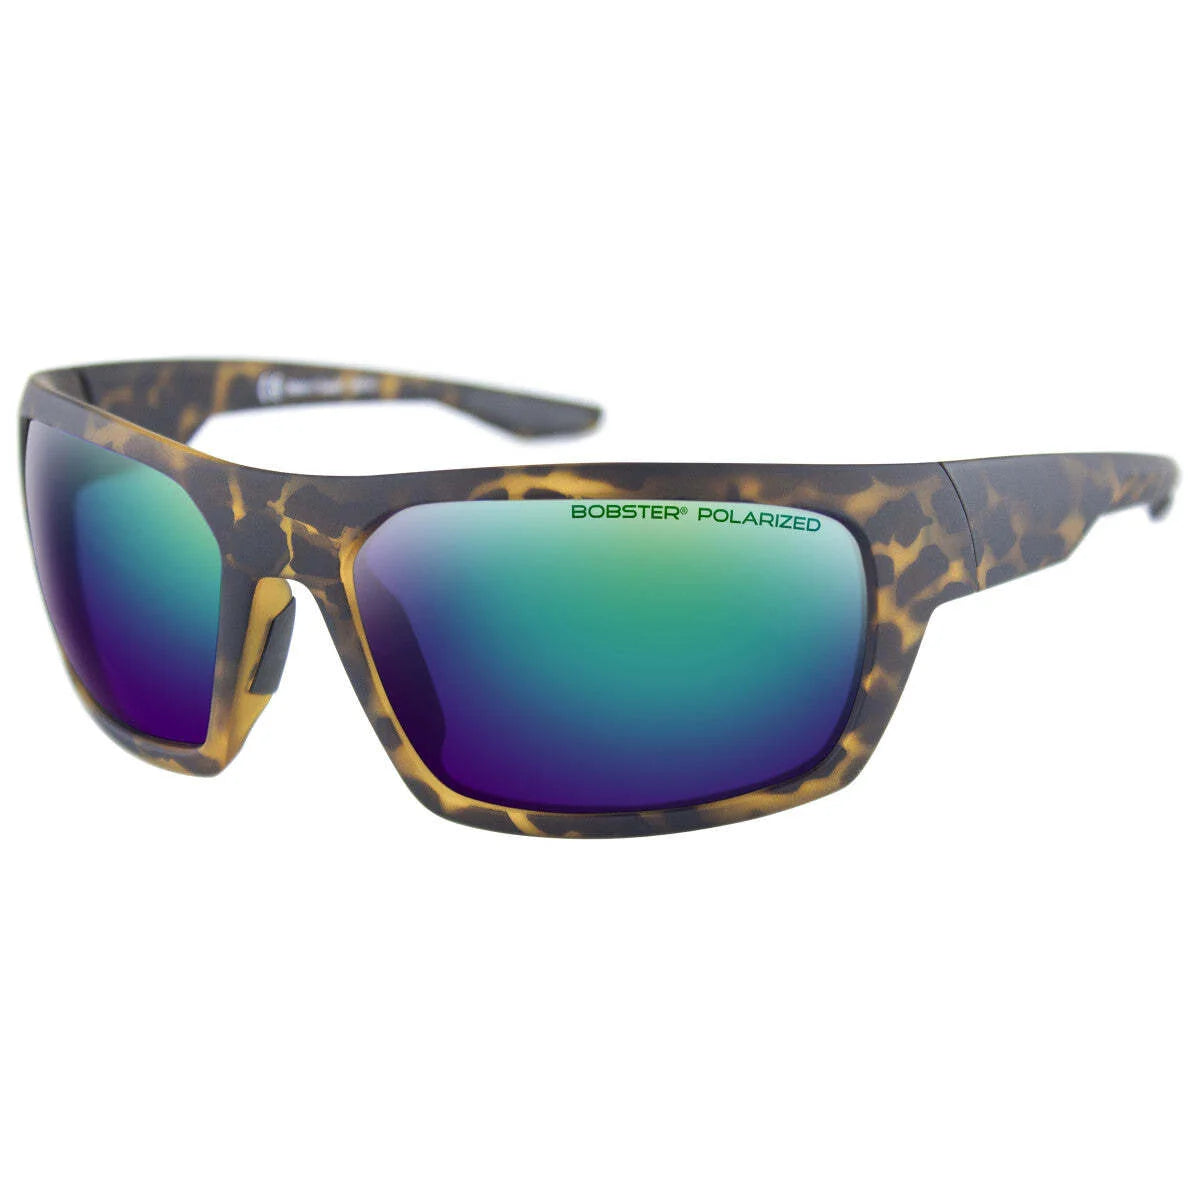 Bobster Trout Sunglasses - Matte Brown Tortoise / Smoked Polarized - Green Revo Mirror